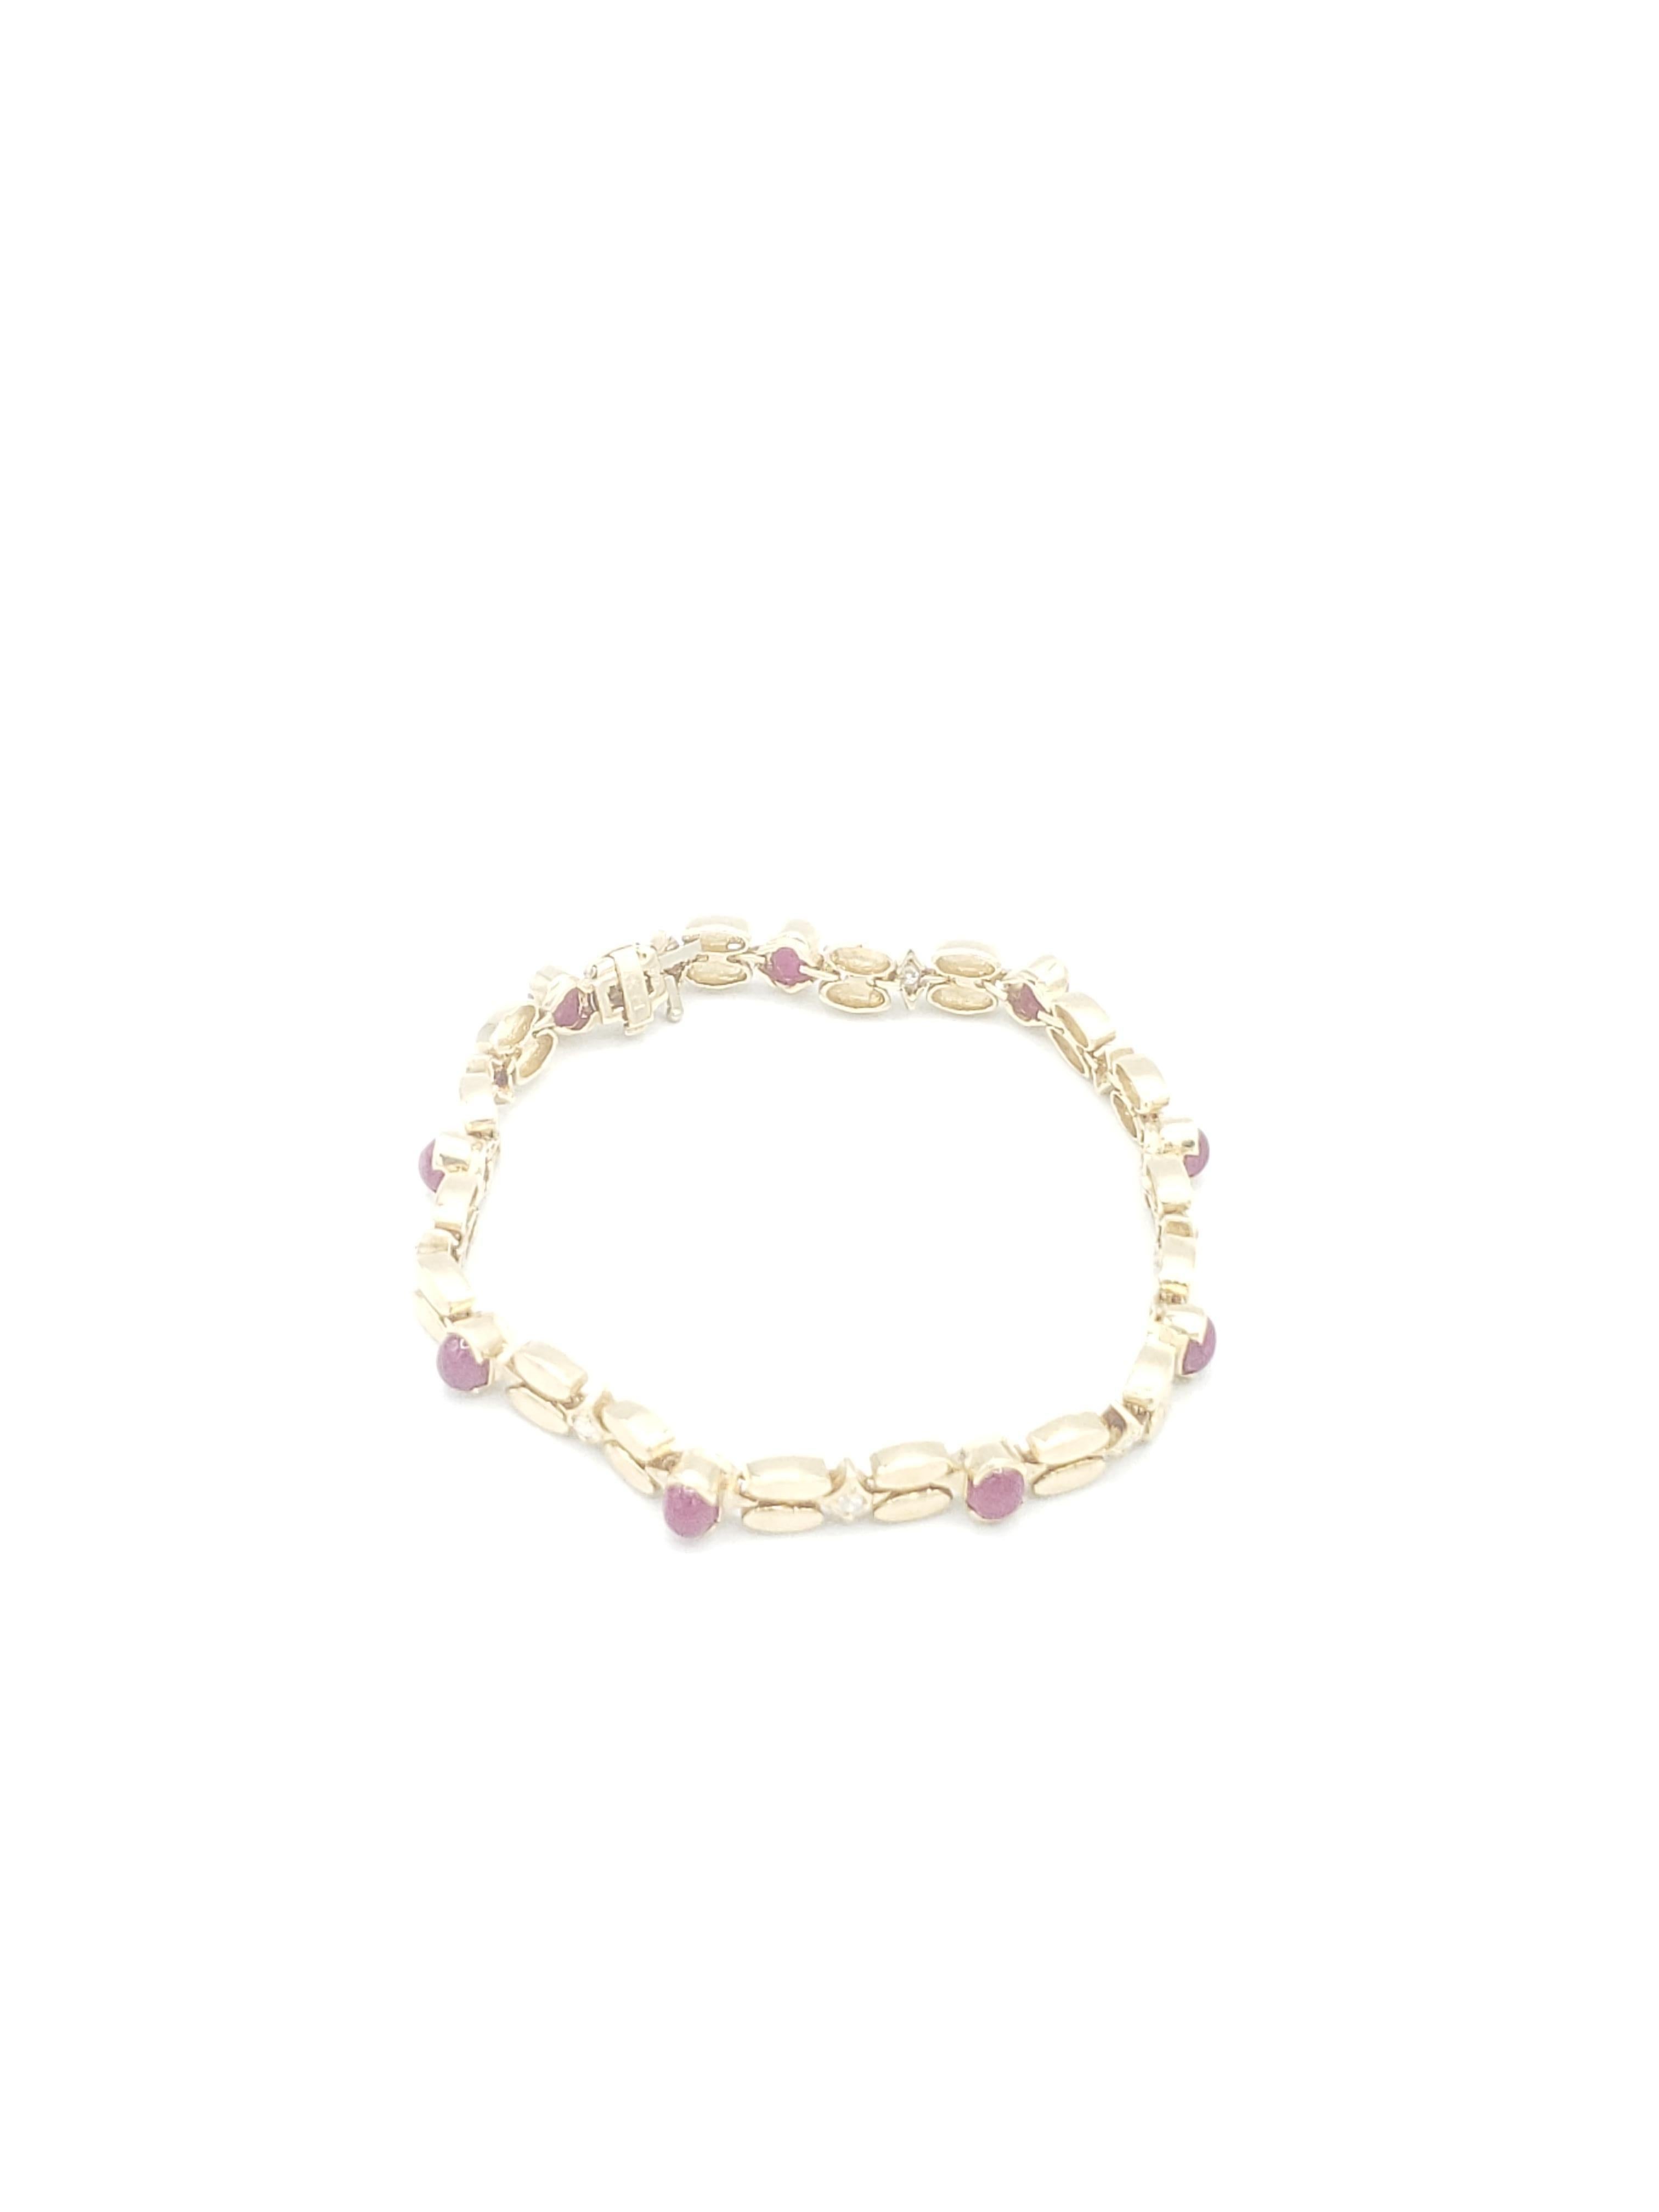 Taille ovale rubis naturel et diamants neufs  Bracelet en or jaune massif 14k en vente